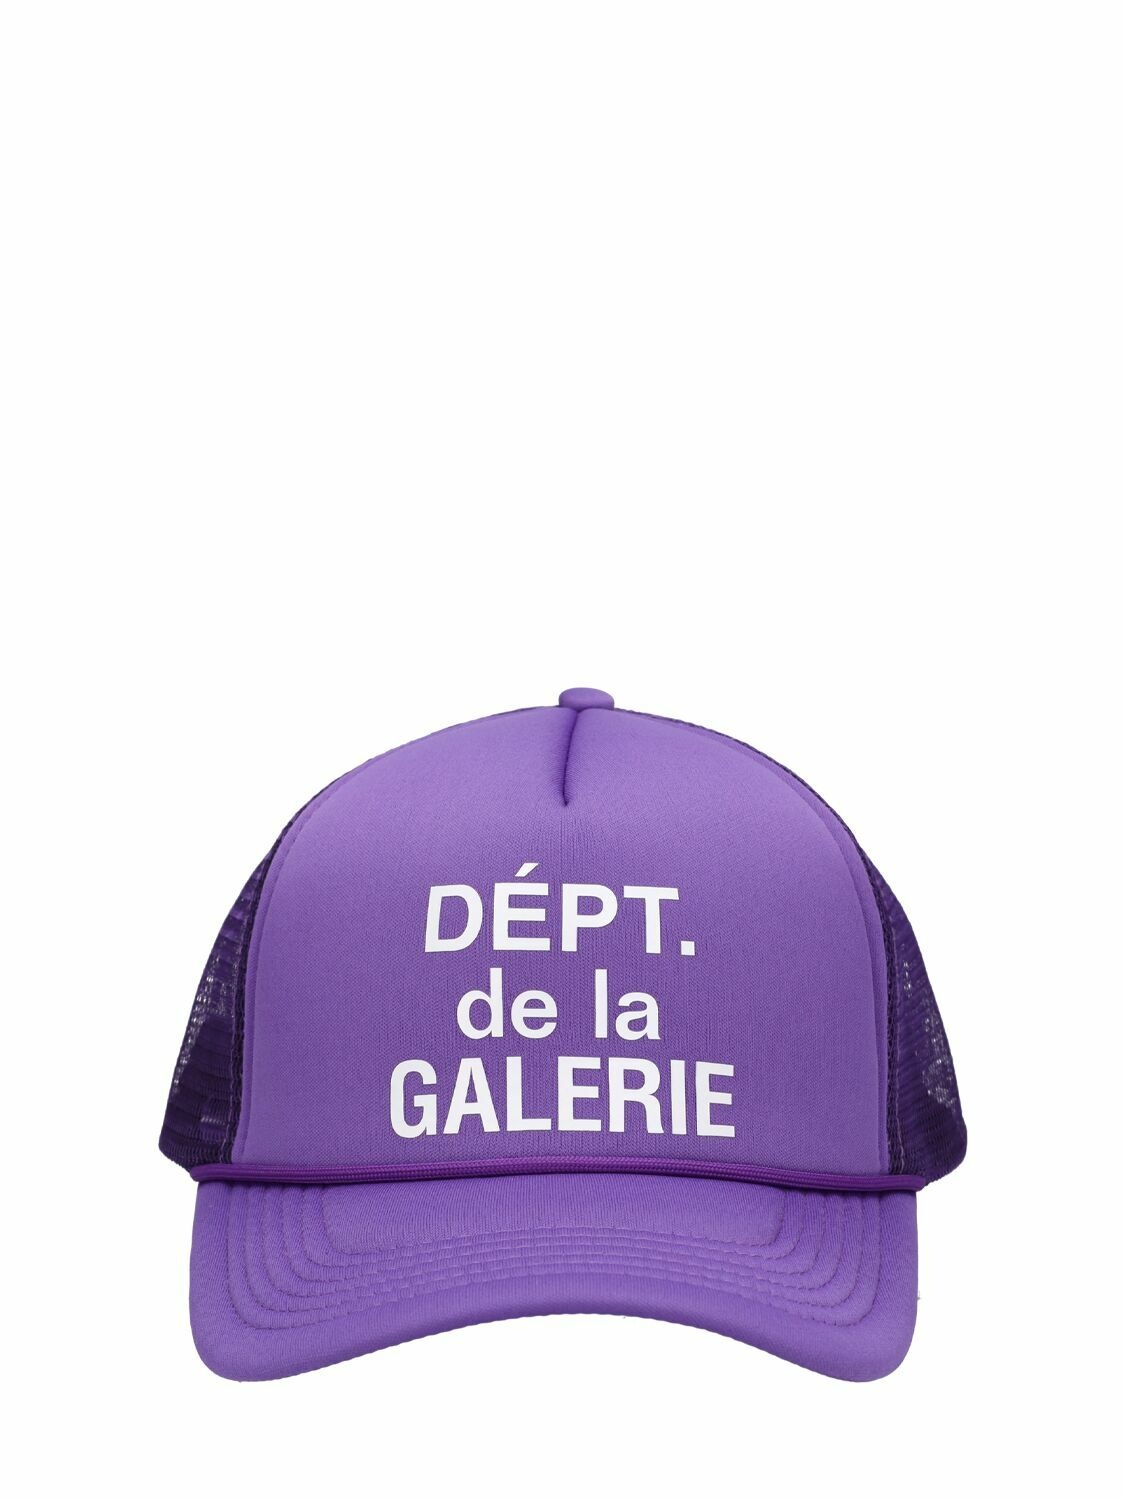 Photo: GALLERY DEPT. - French Logo Trucker Hat